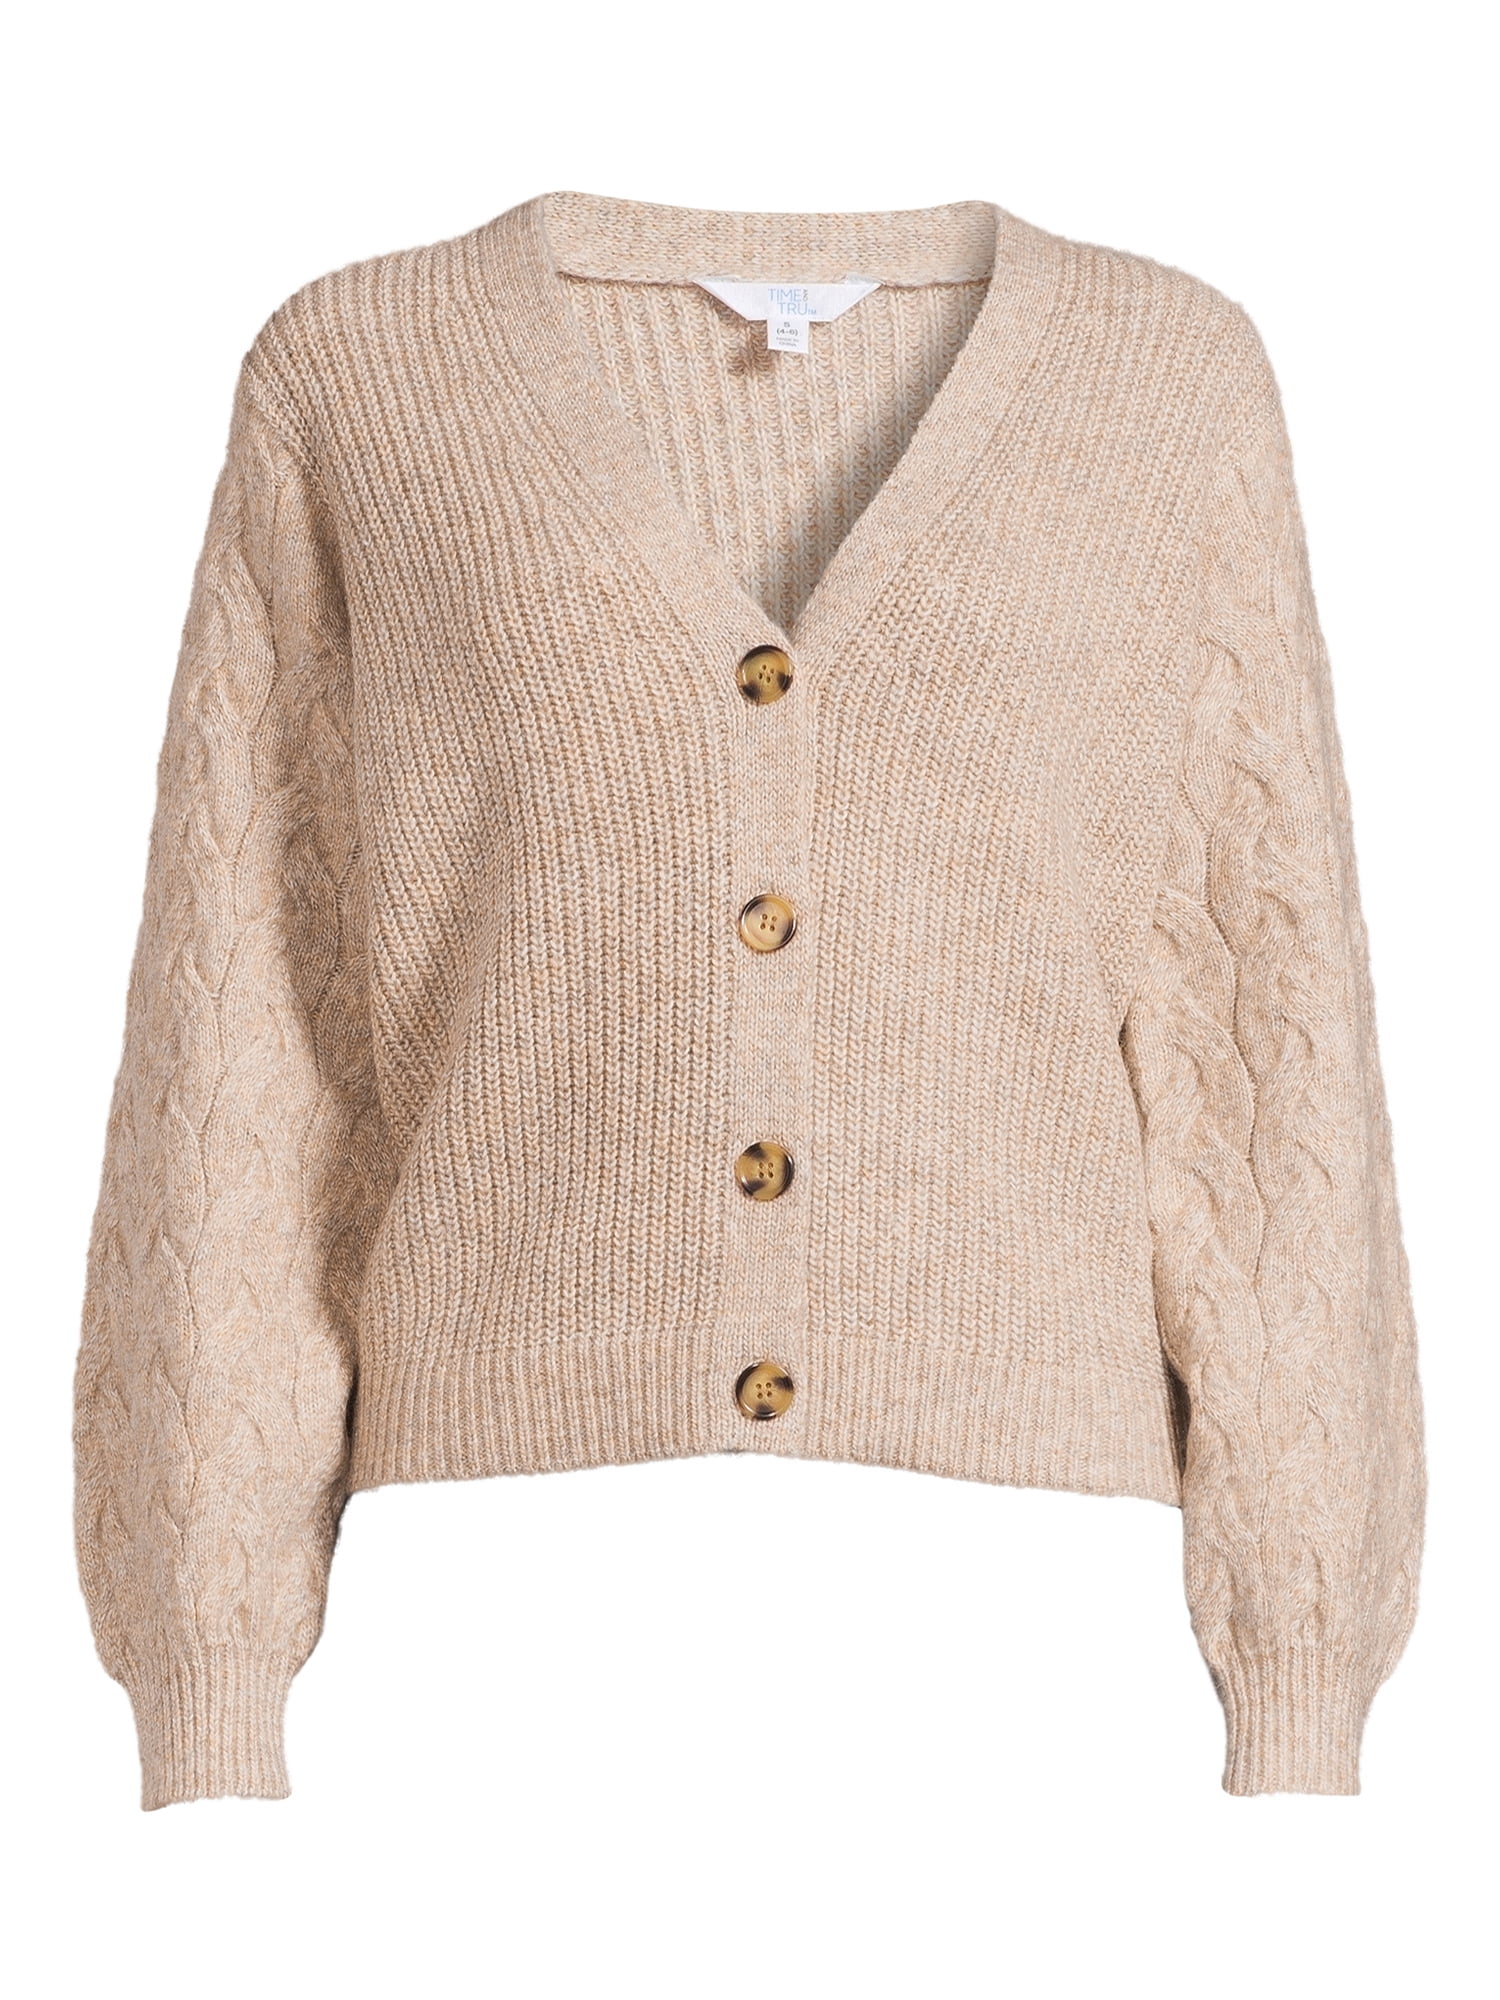 Cable-knit Sweater - Beige melange - Ladies